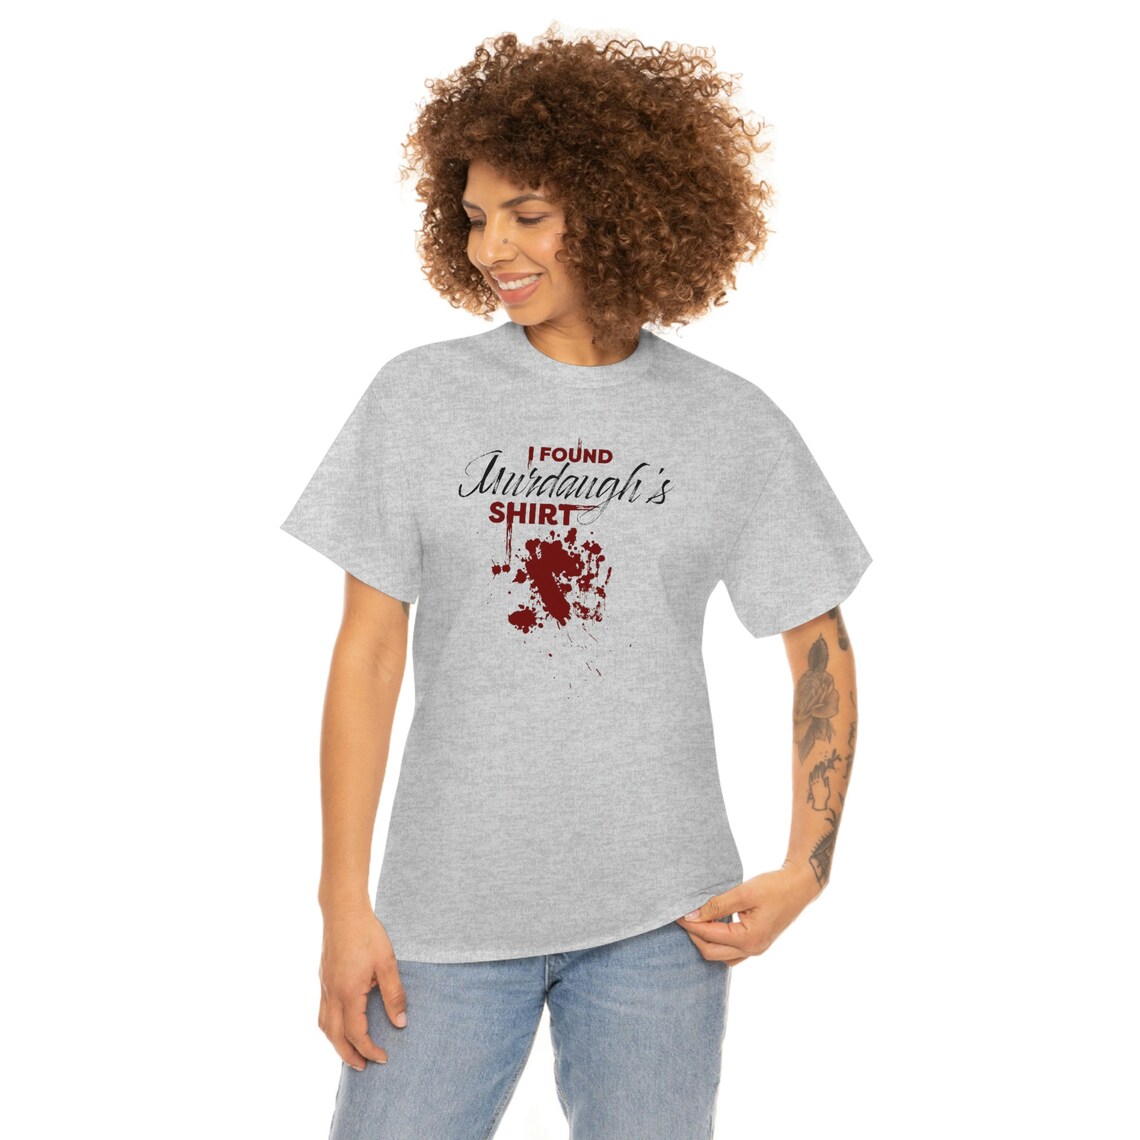 Alex Murdaugh Missing Shirt, Murdaugh Shirt, Funny Shirt, Blood Stain ...